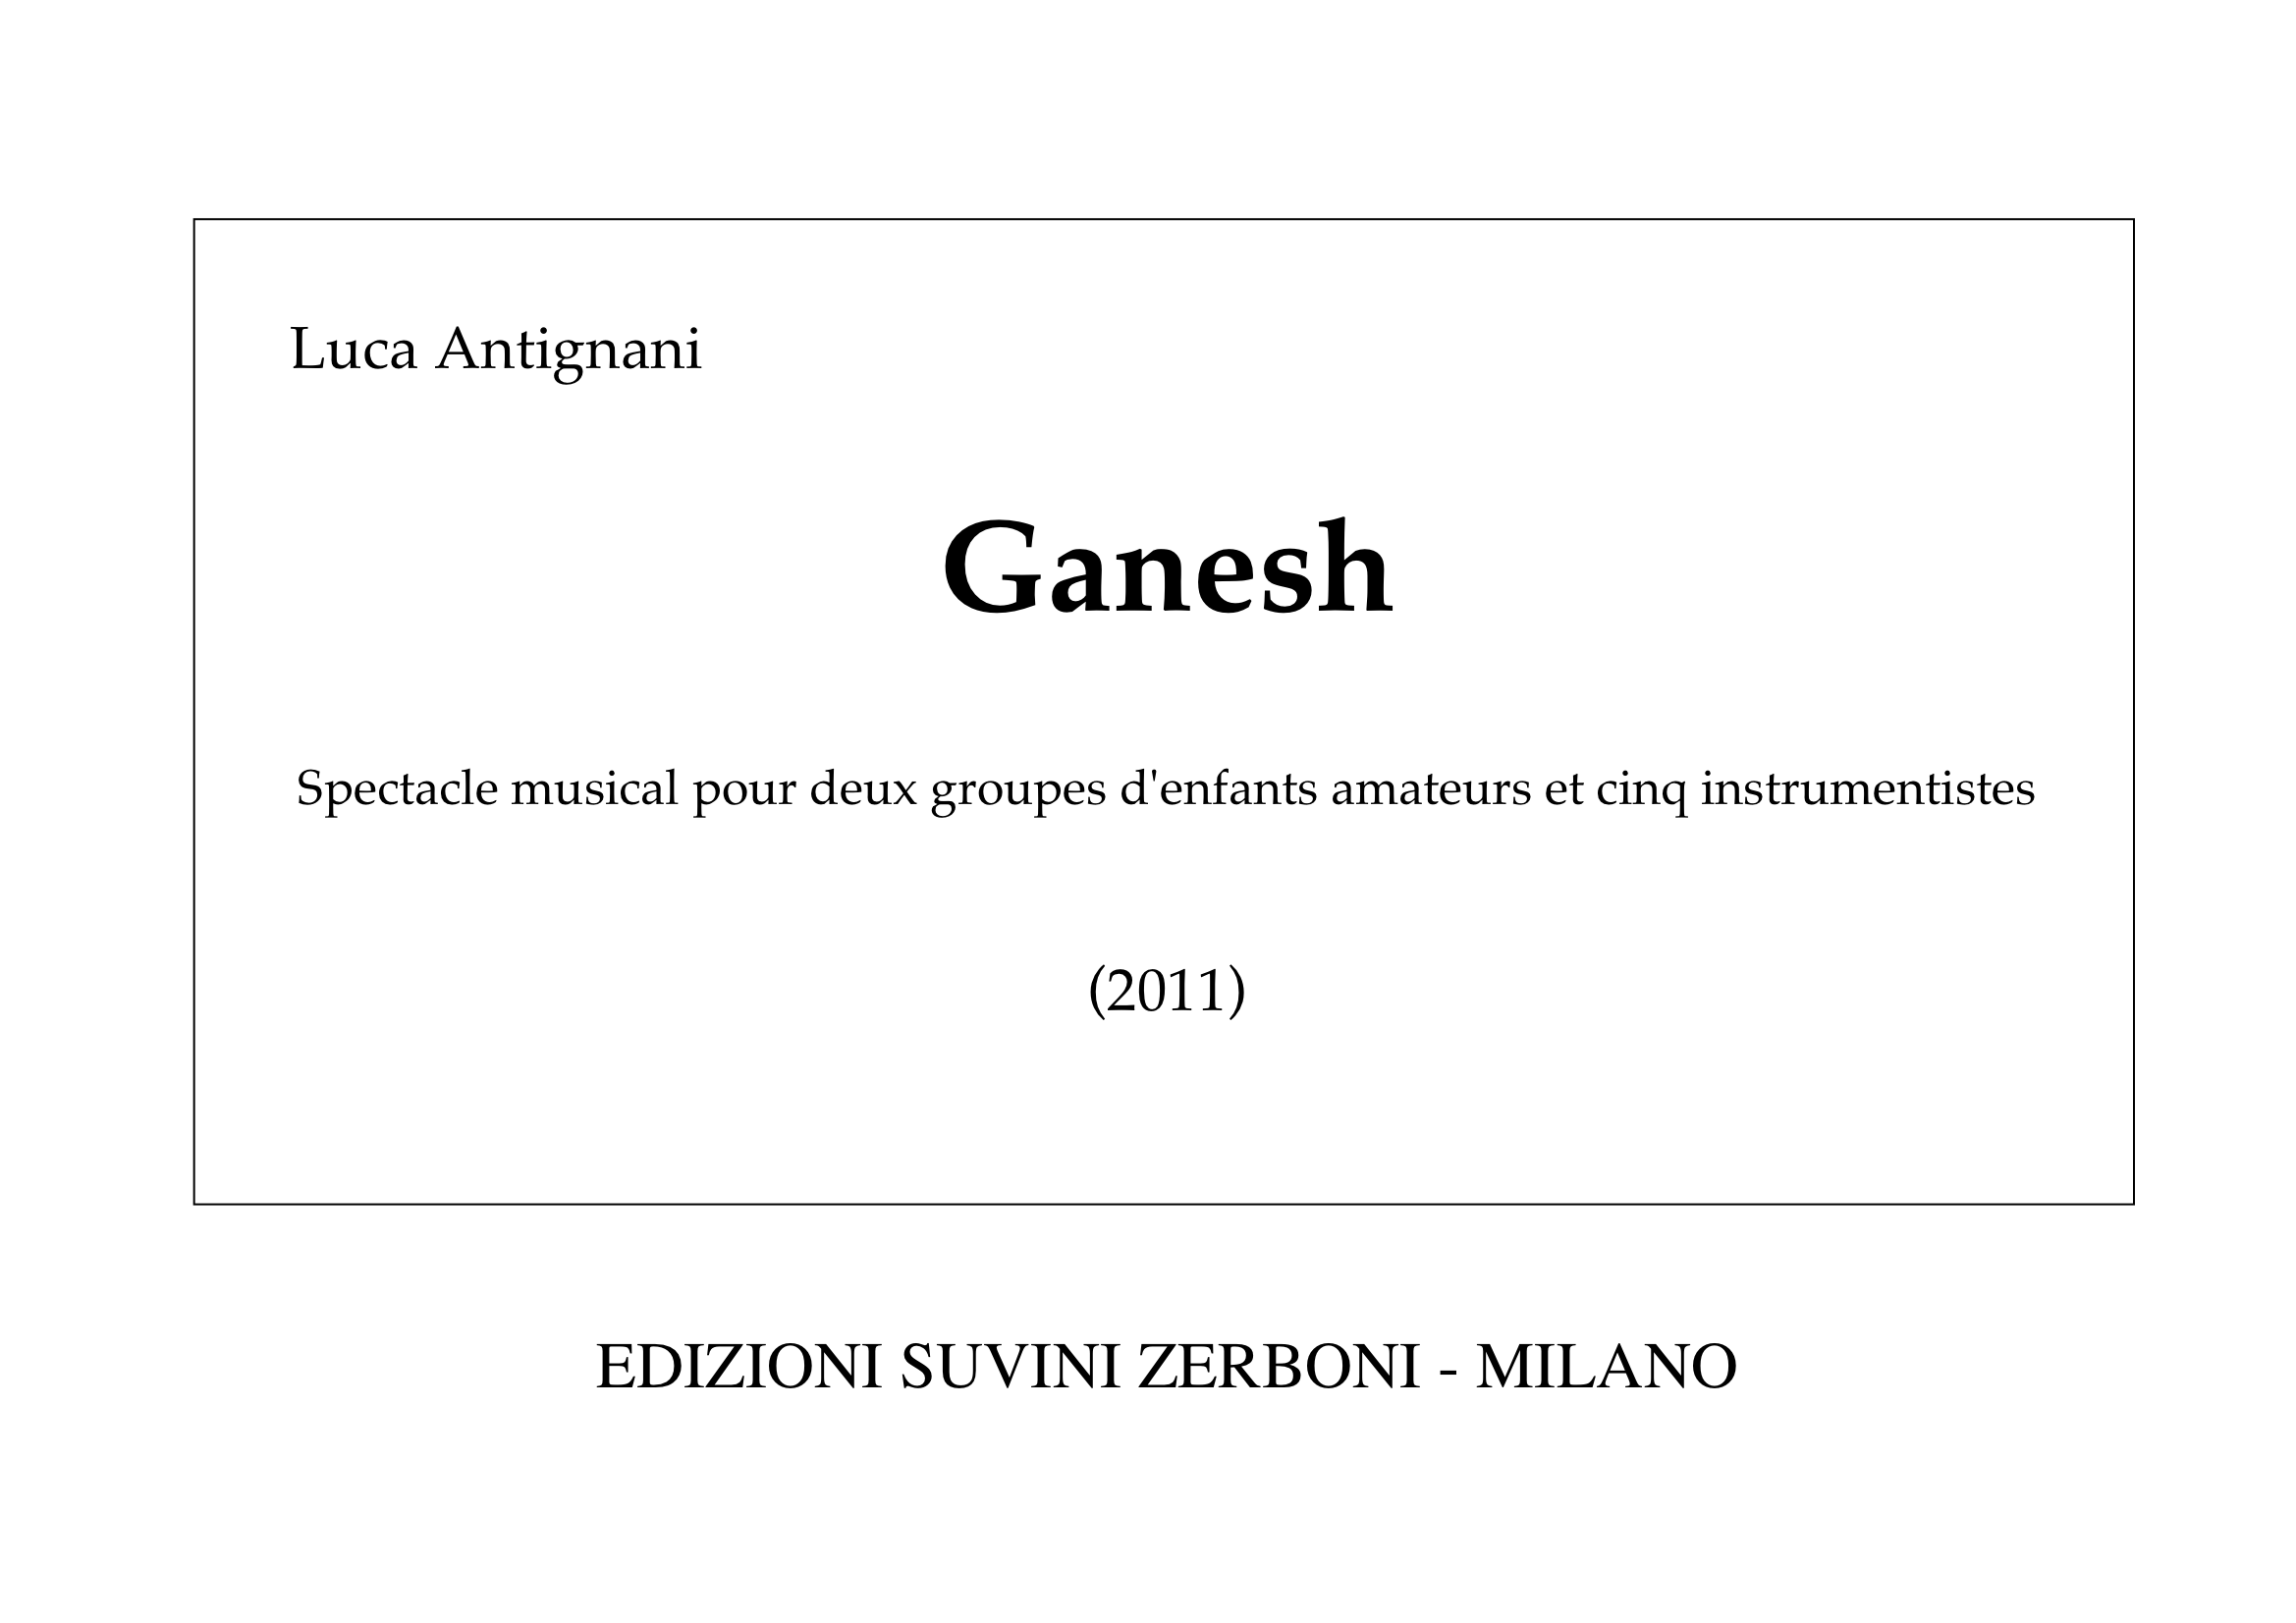 Ganesh_Antignani 1